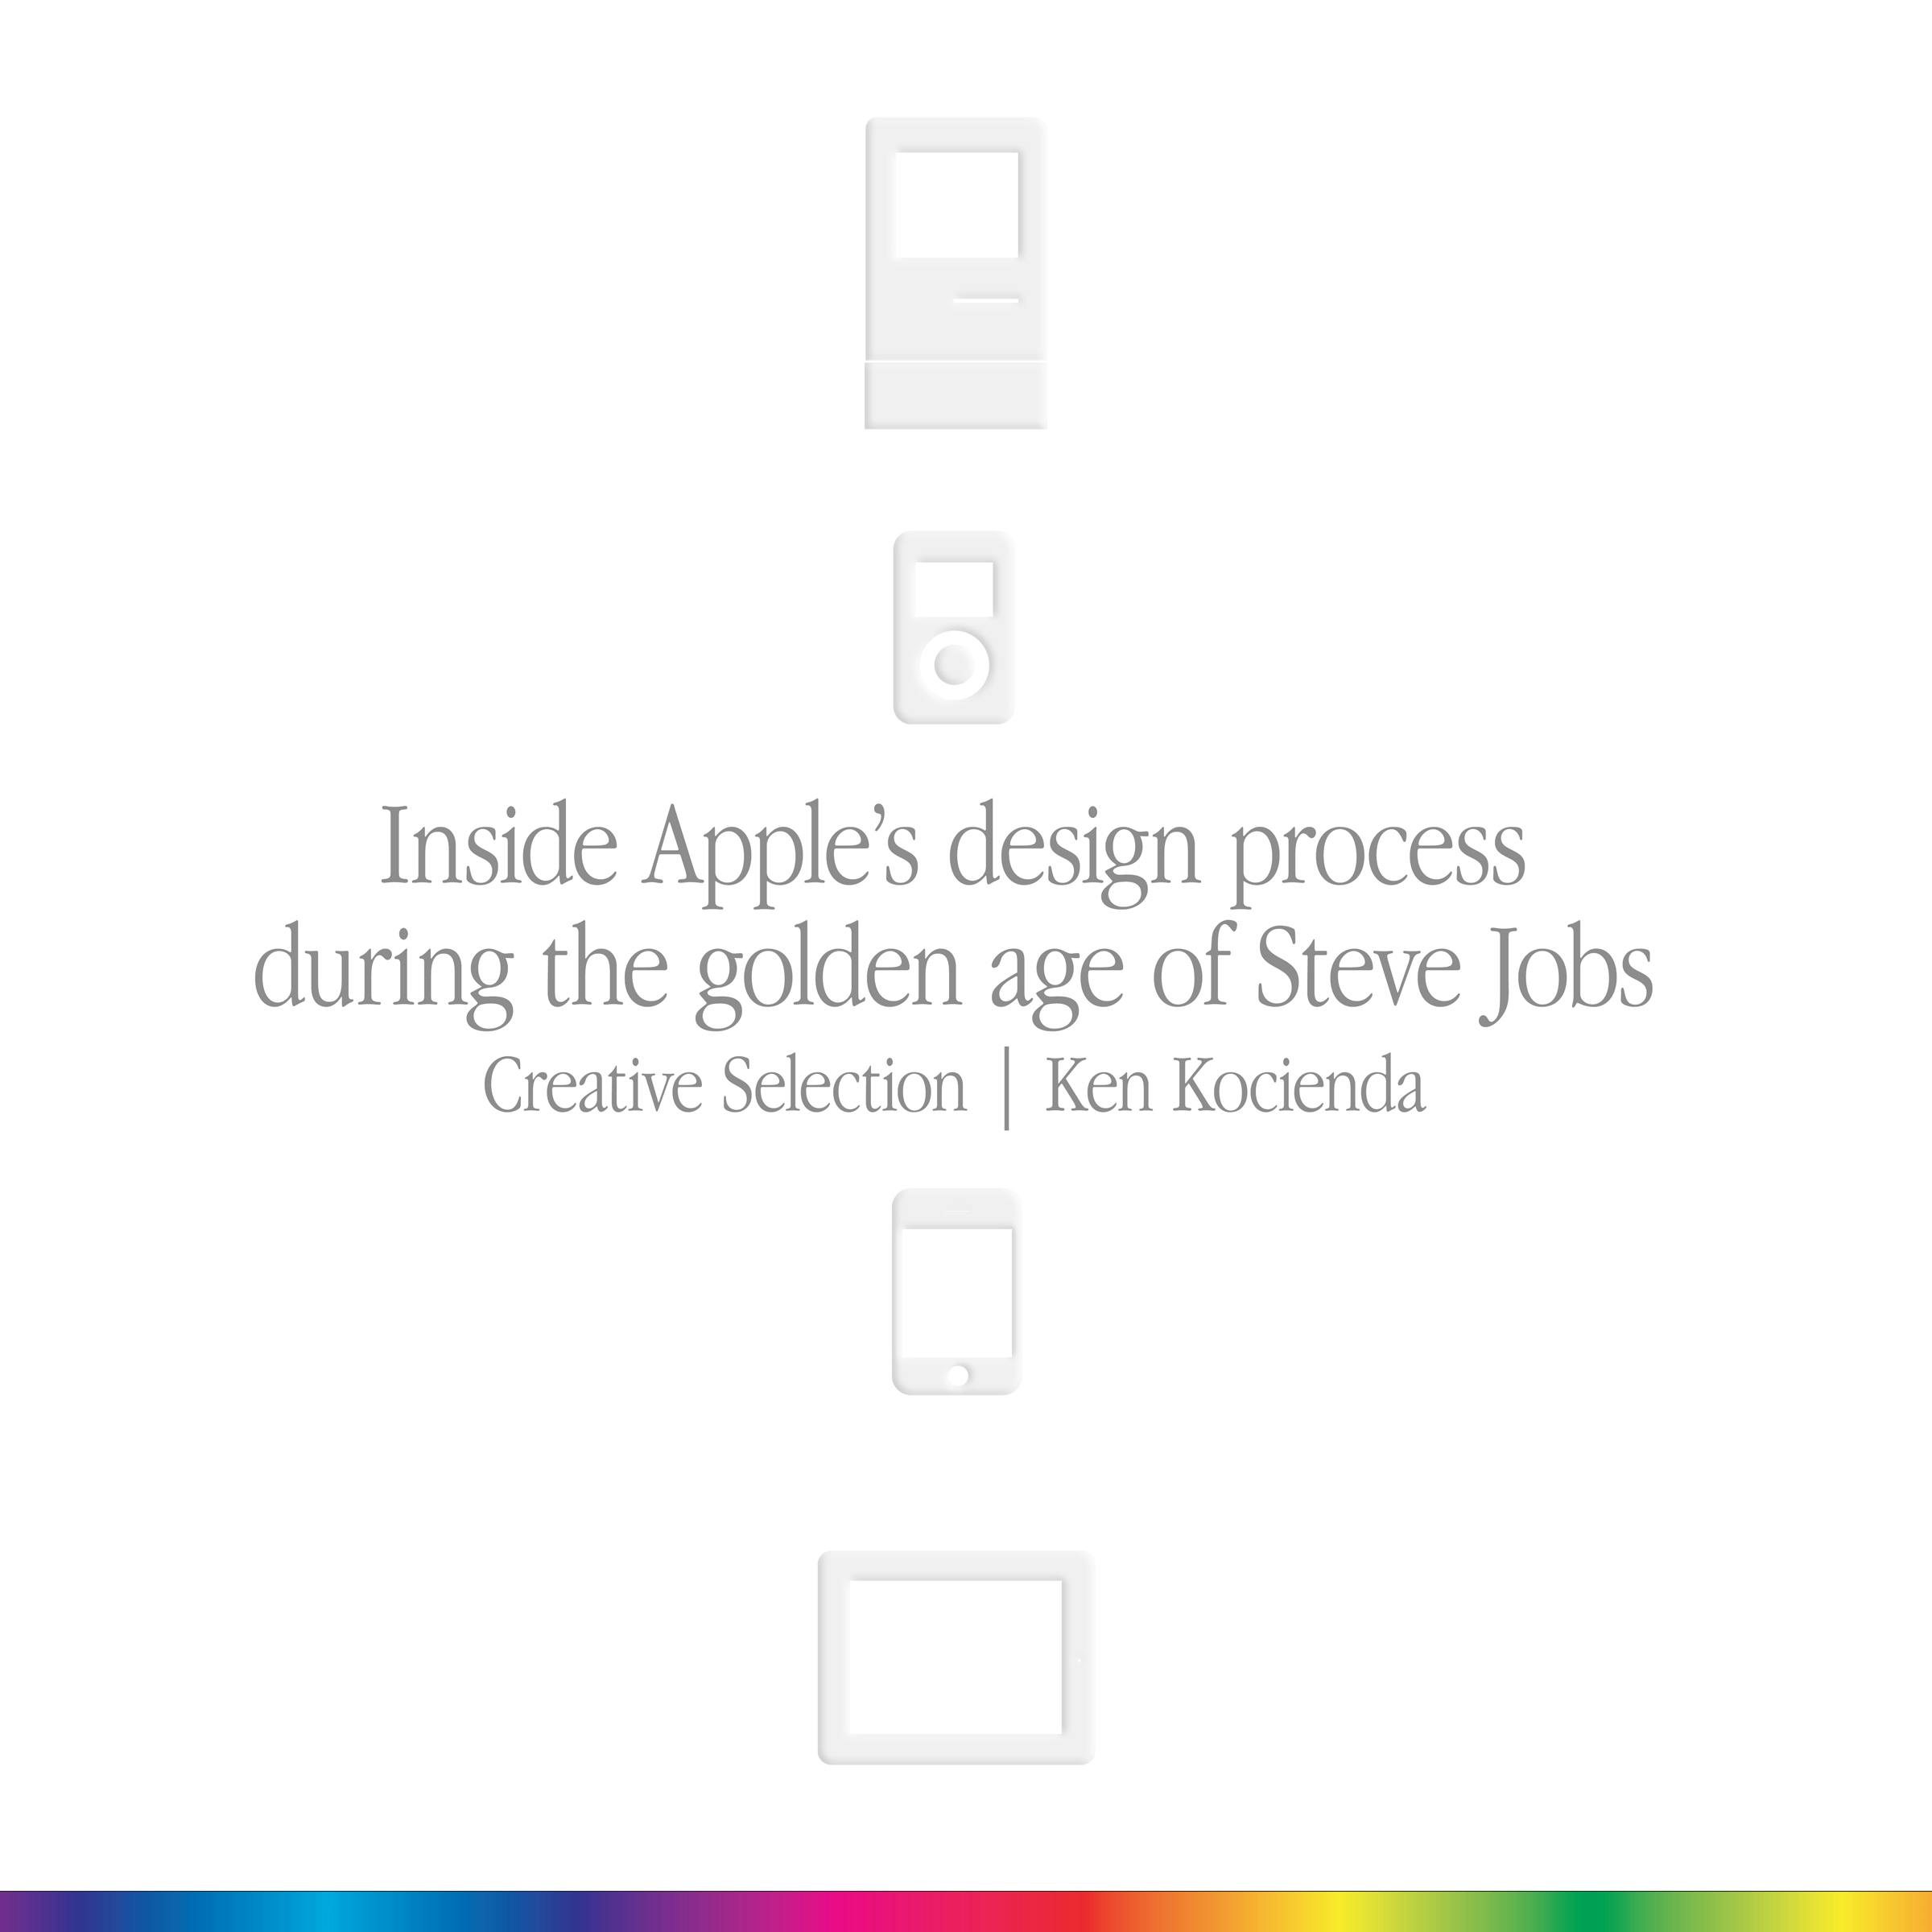 Creative Selection: Inside Apple's Design Process During the Golden Age of Steve Jobs - Ken Kocienda